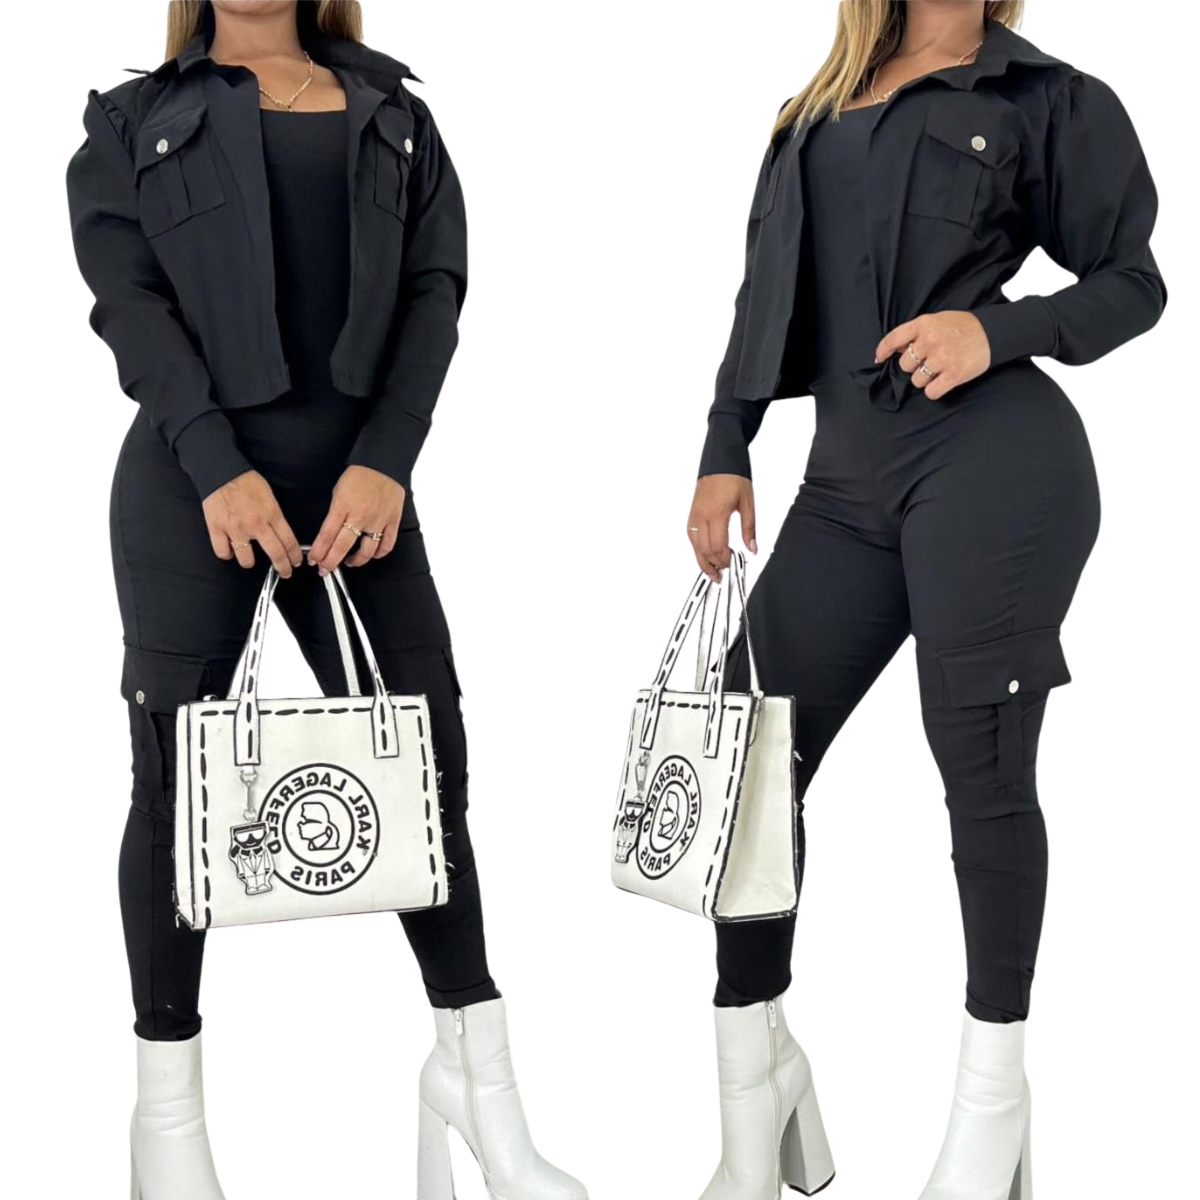 enterizo cargo y chaqueta mujer (talla única) comprar en onlineshoppingcenterg Colombia centro de compras en linea osc 1